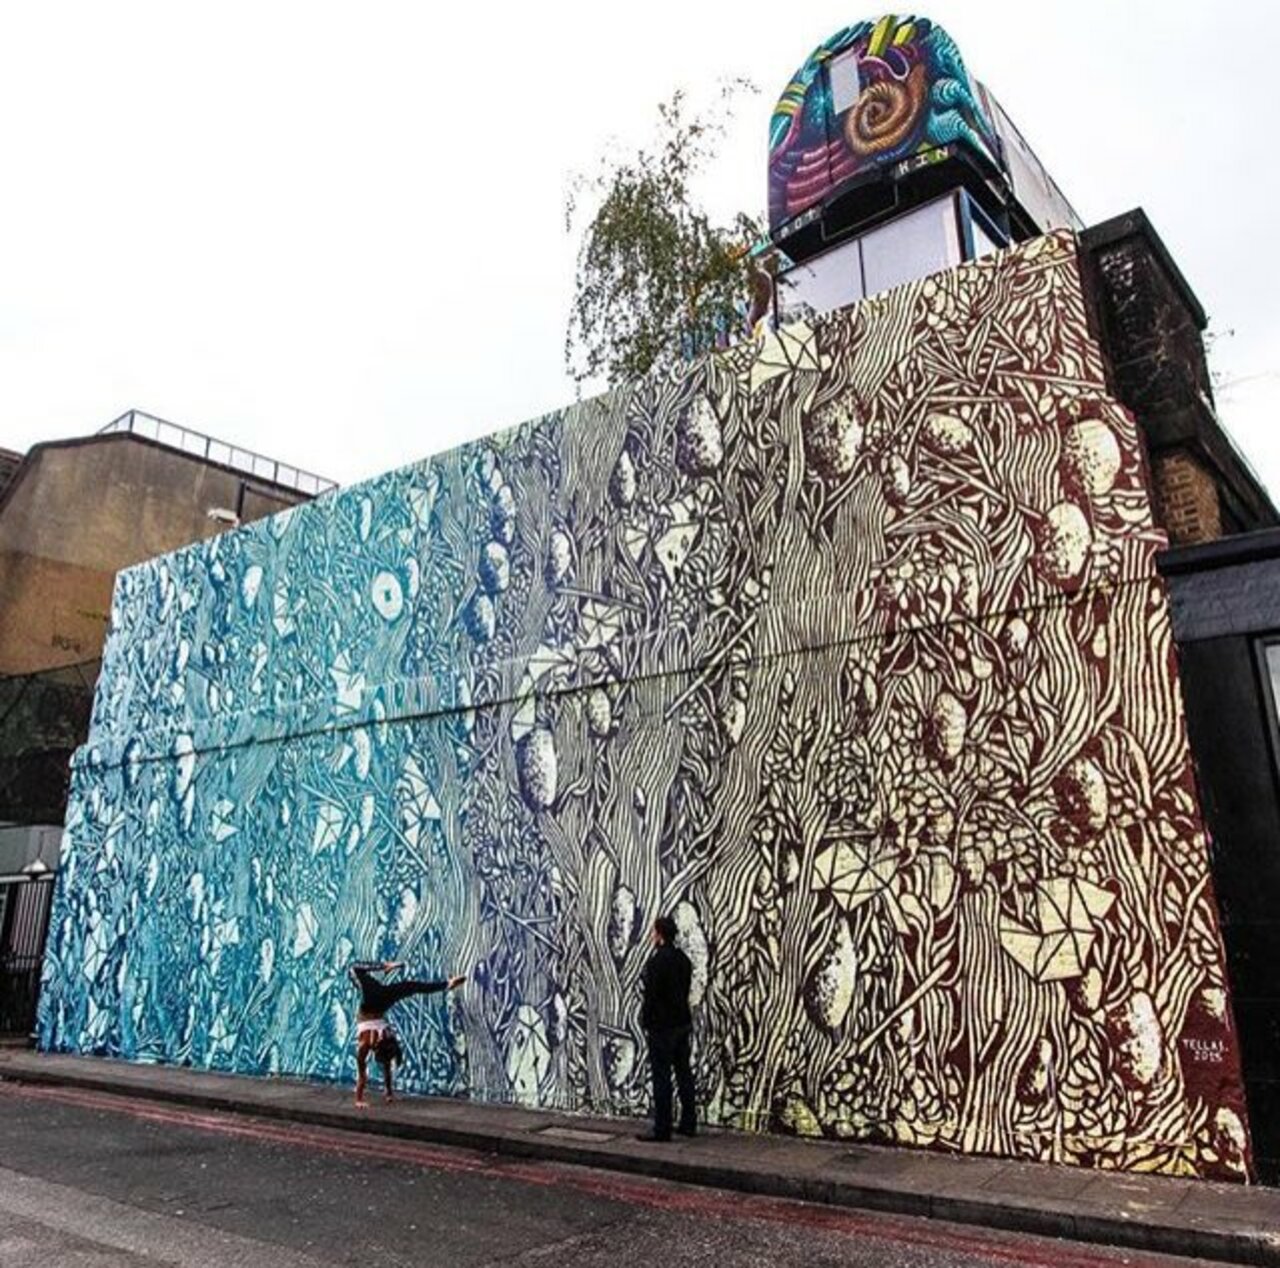 New Street Art by Tellas in Shoreditch London 

#art #graffiti #mural #streetart https://t.co/hyYxXfUCpw